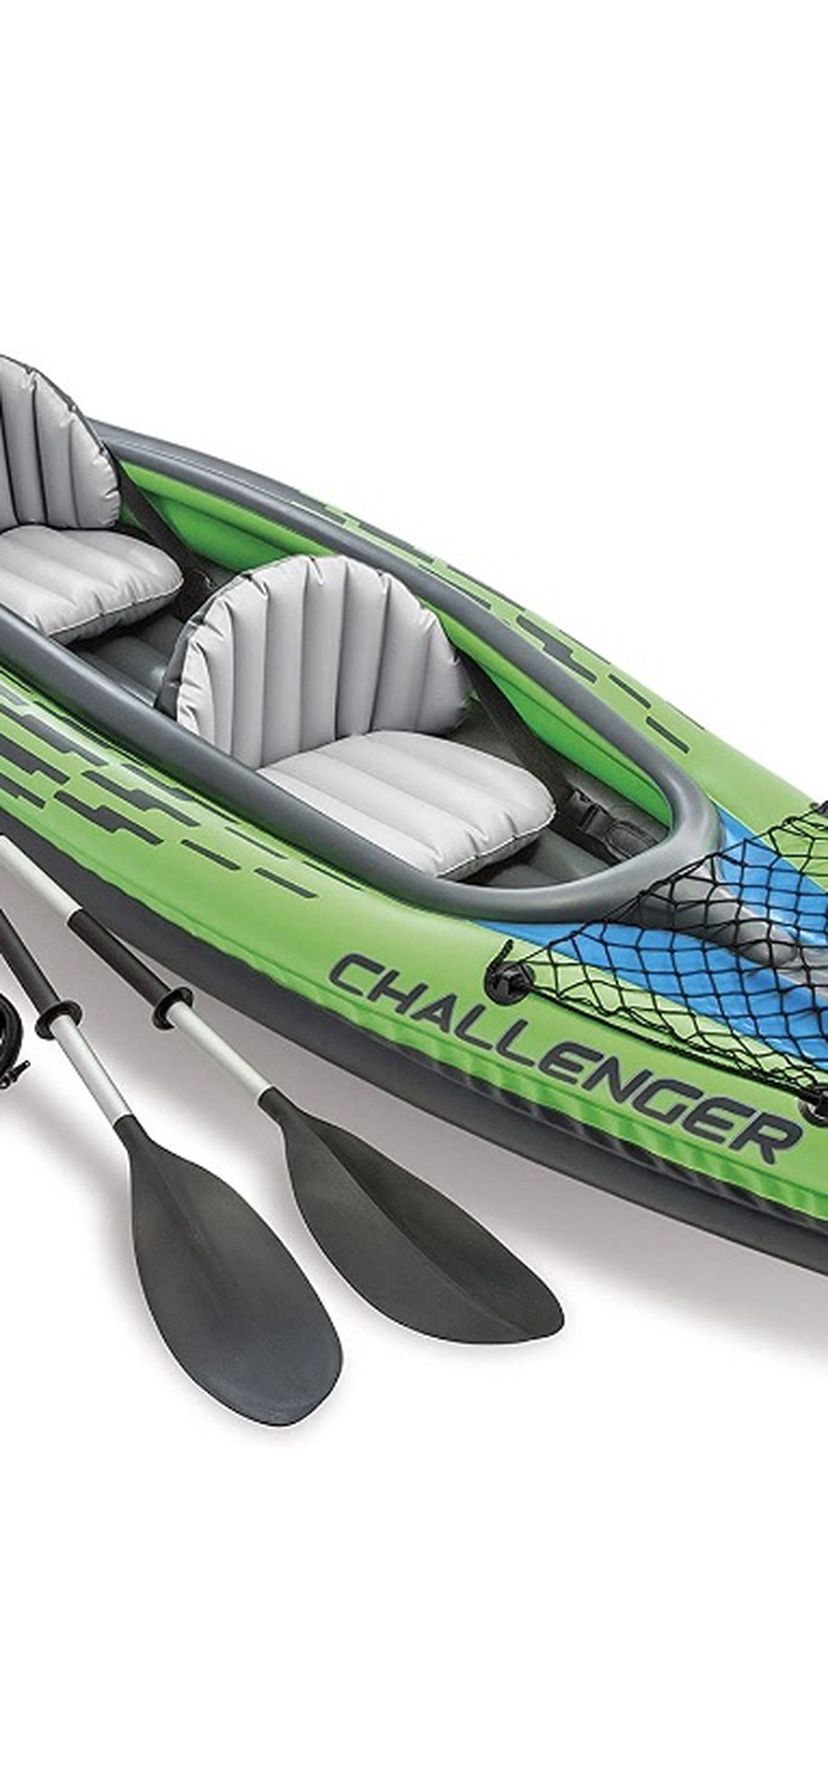 Inflatable Kayak-Intex Challenger Kayak Series